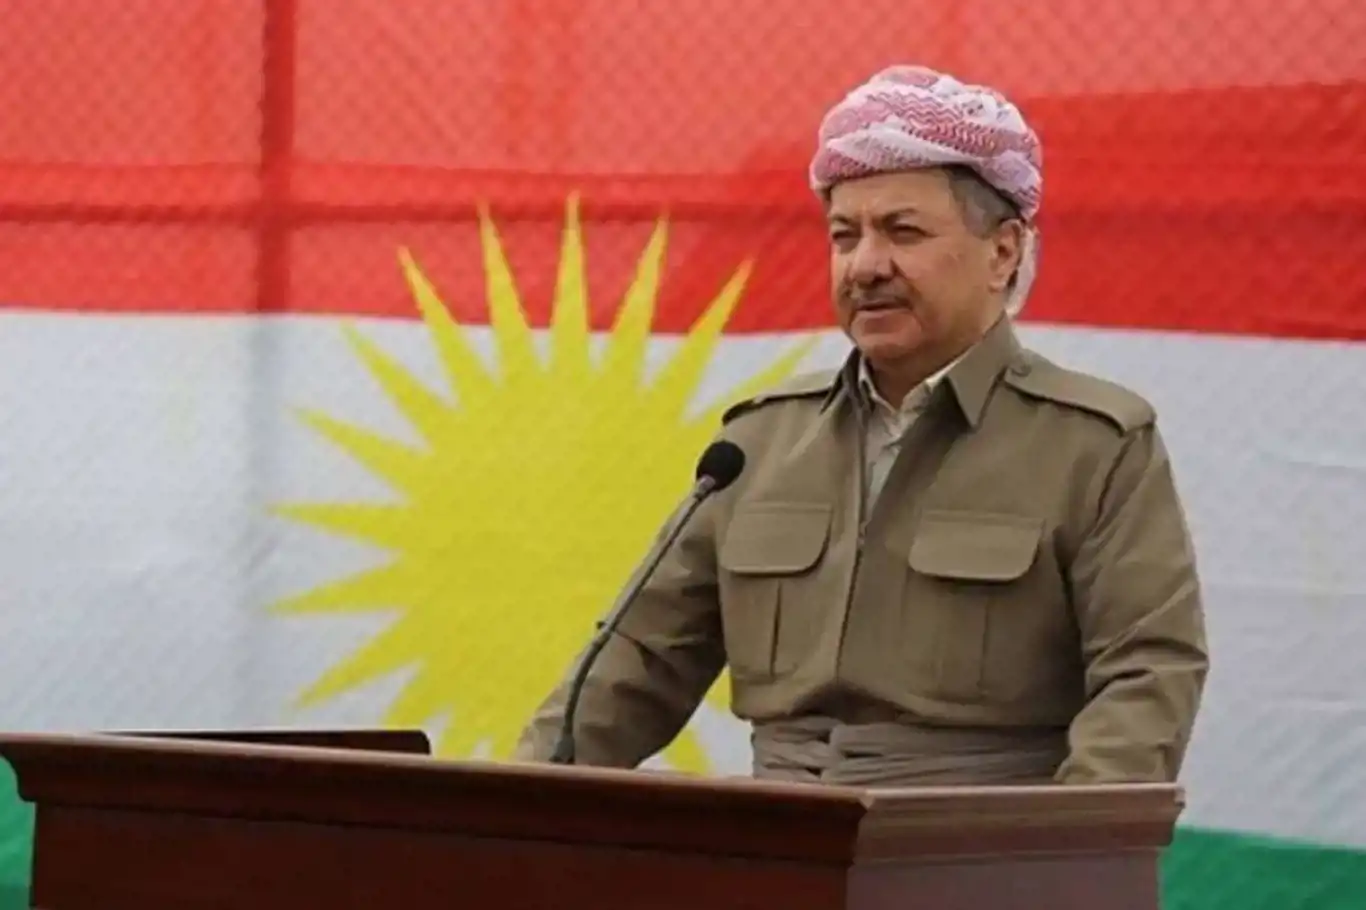 Kurdish leader, Masoud Barzani, commemorates 6th anniversary of independence referendum